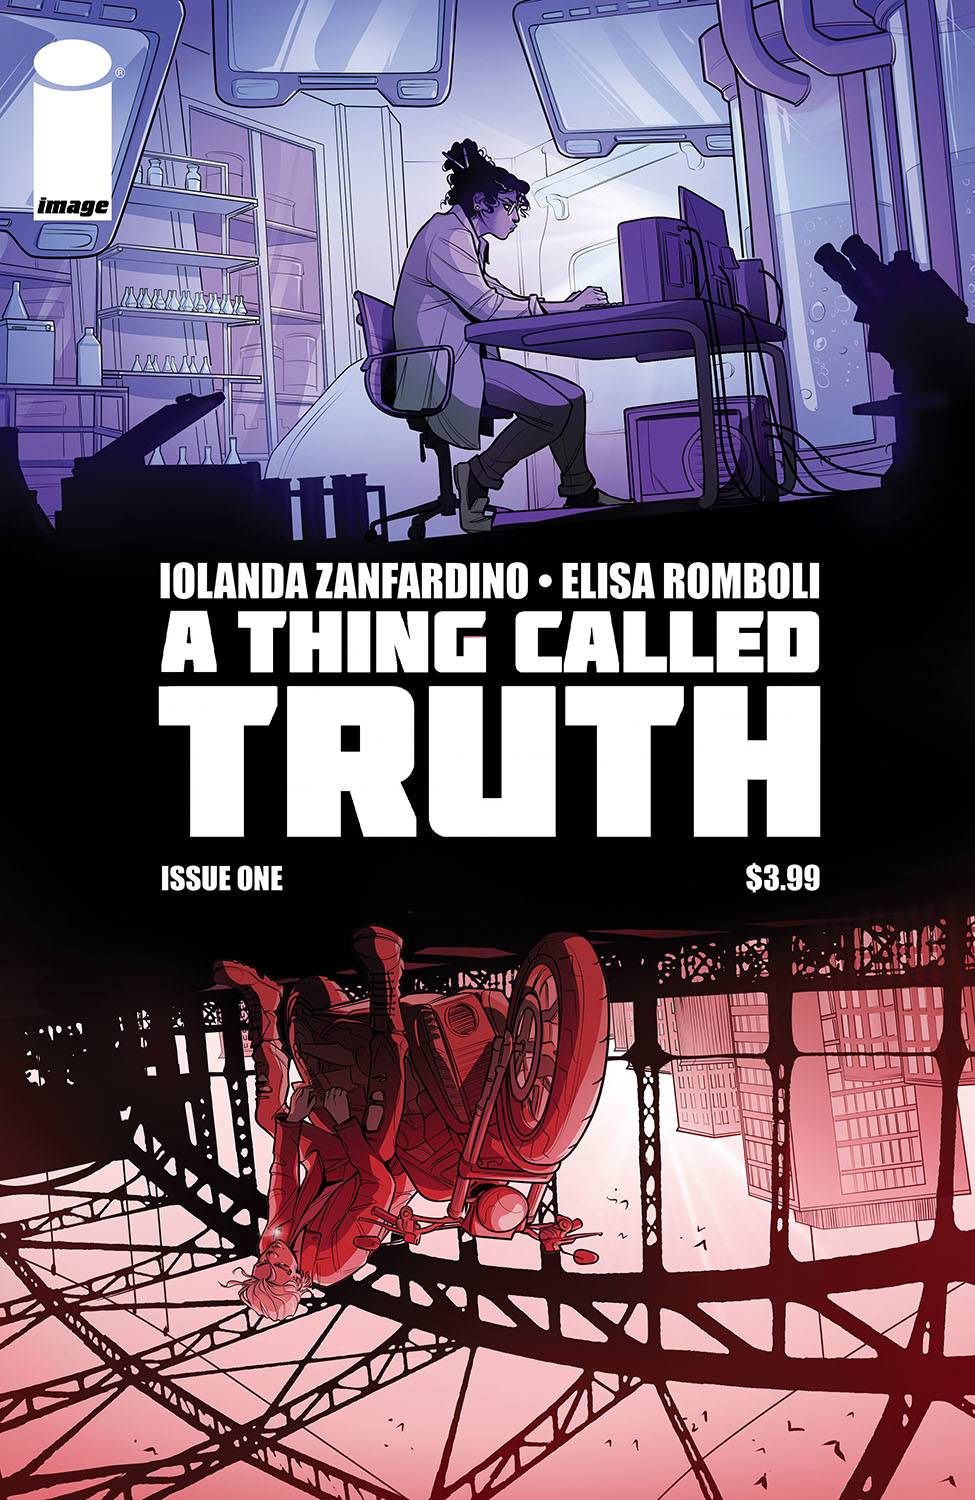 A Thing Called Truth #1 (Cover B Variant - Zanfardino)